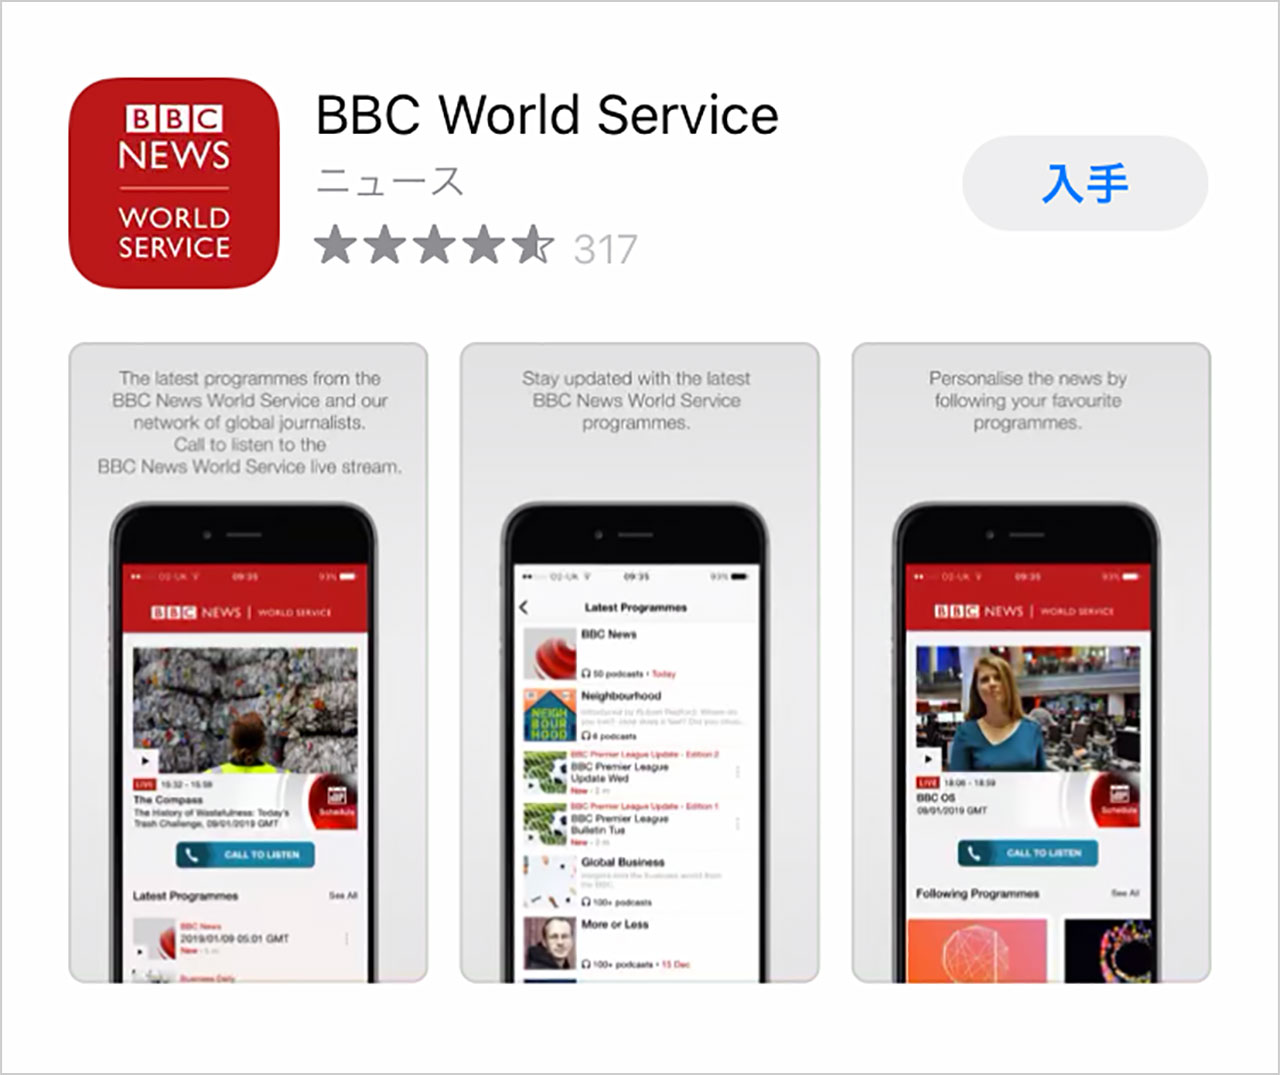 BBC world service